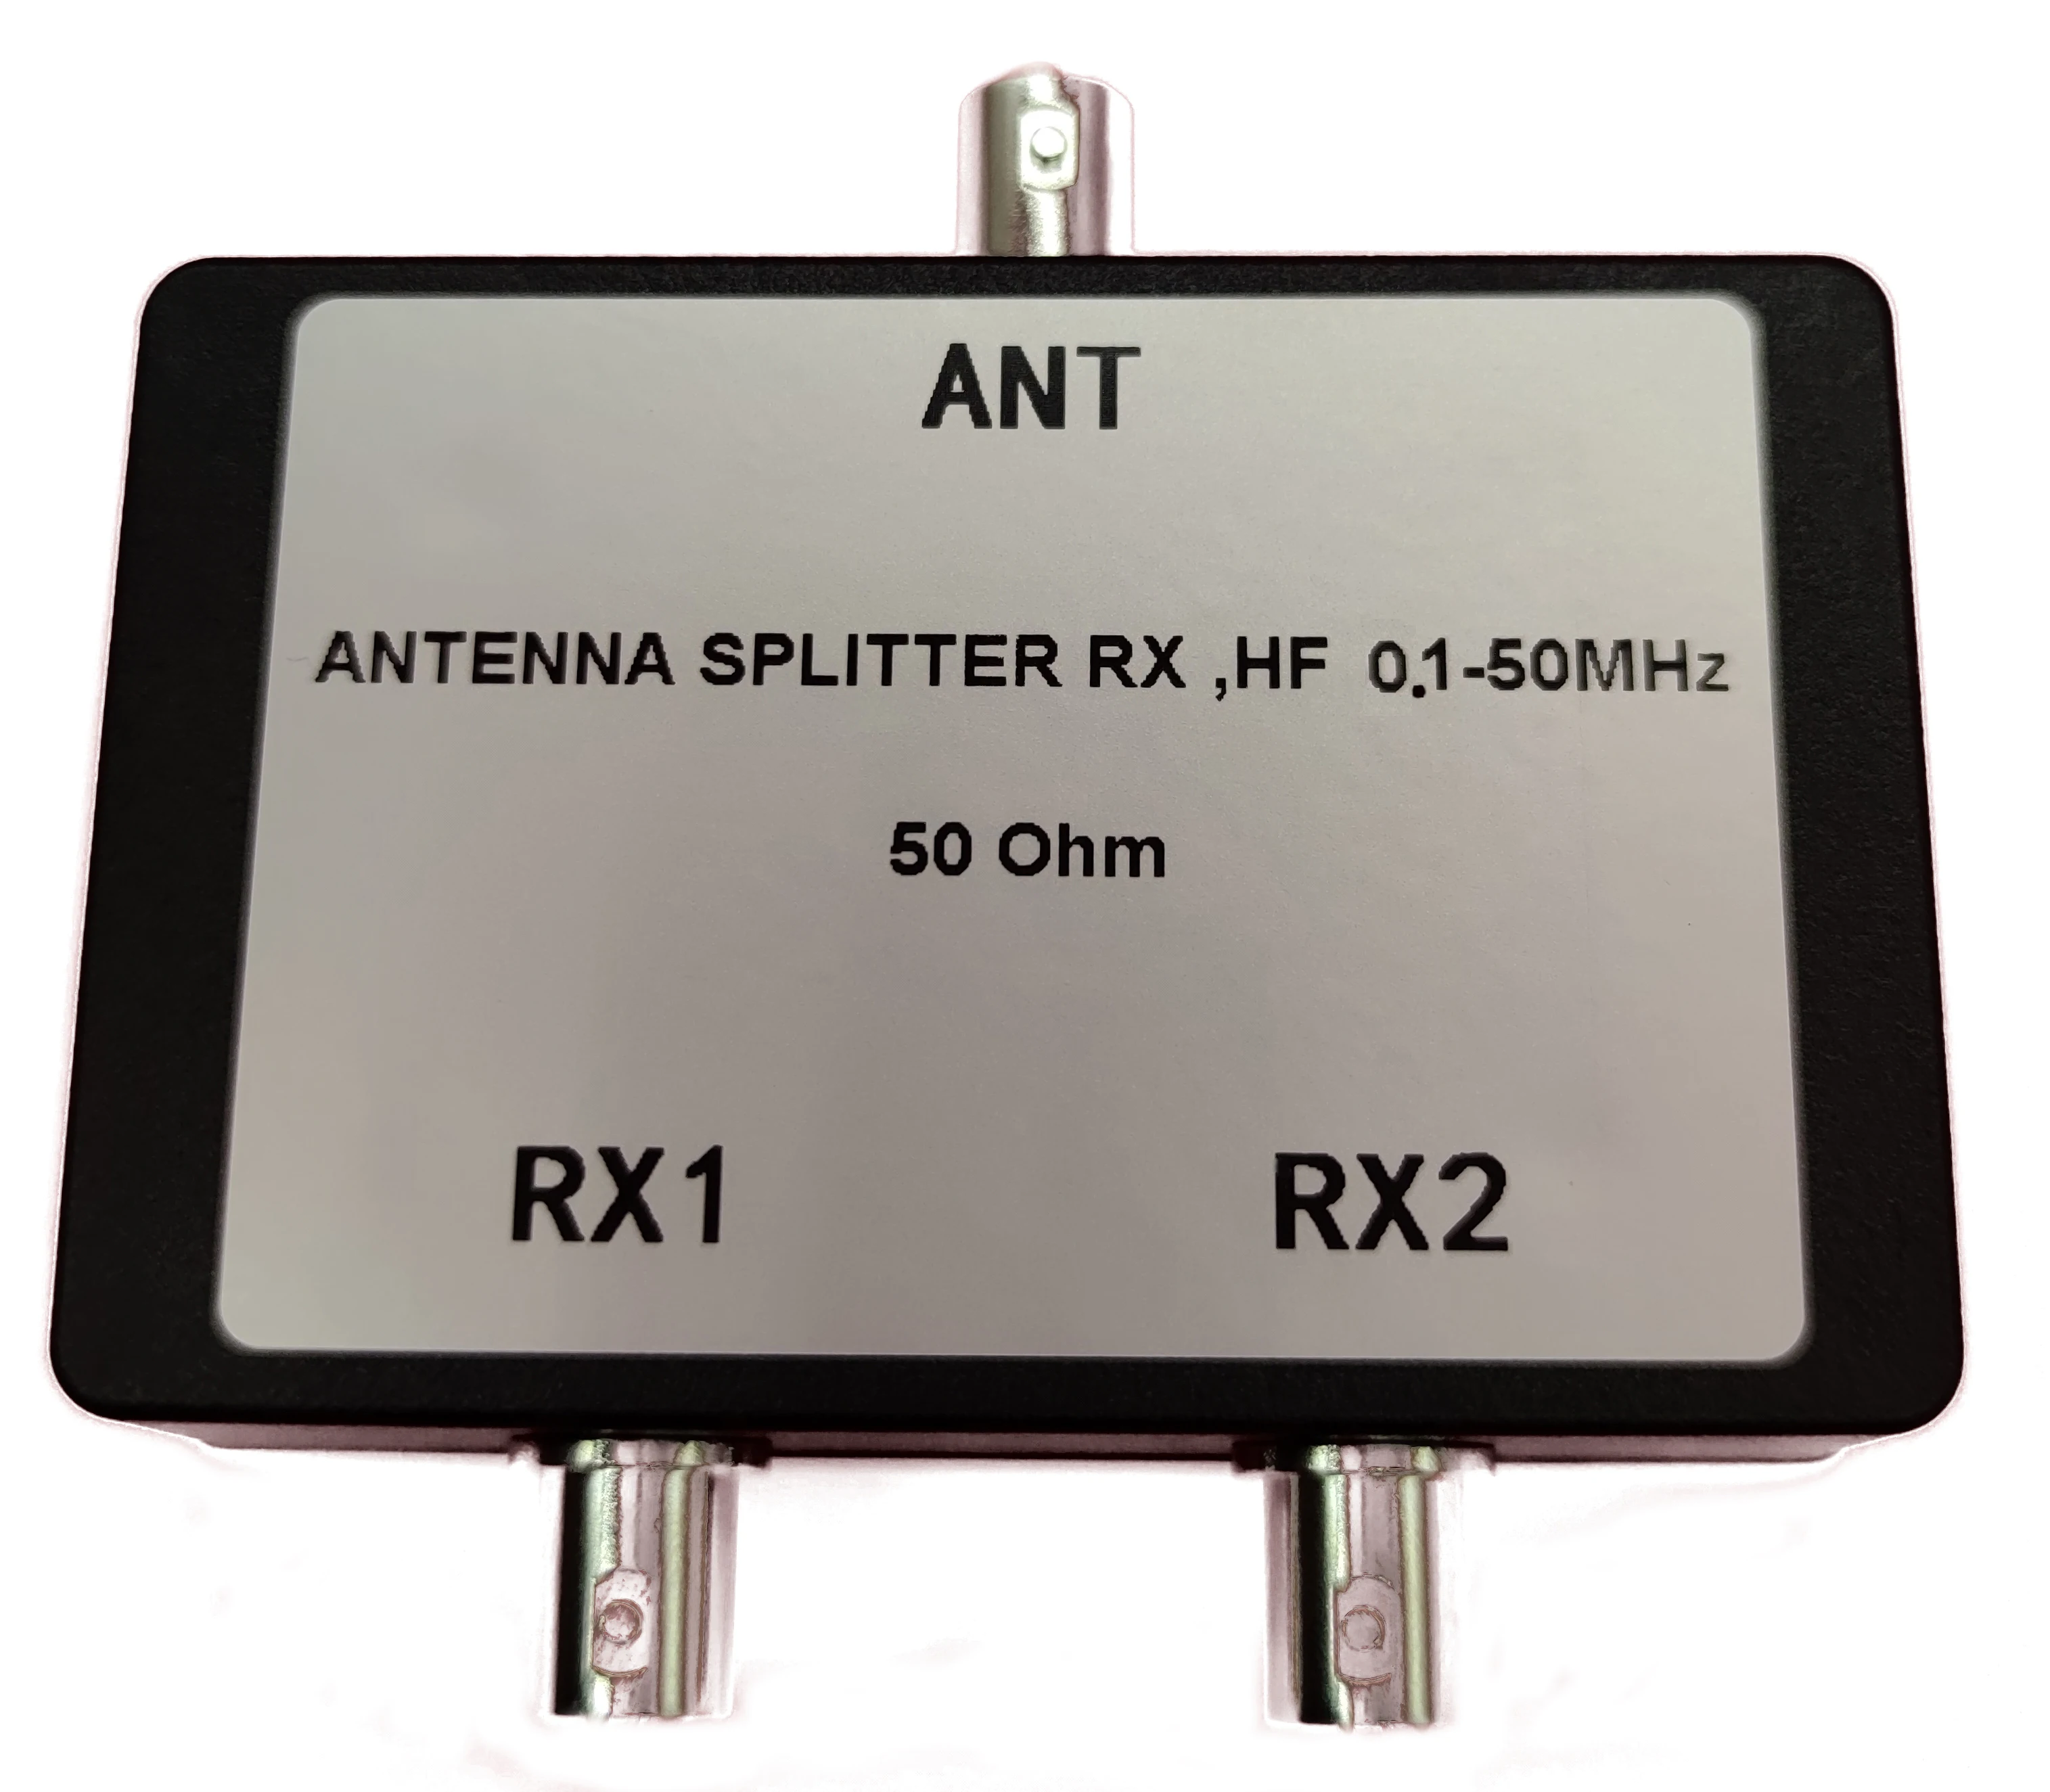 Antenna Splitter RX HF TV Satellite Coax Cable Signal Splitter 0.1-50 MHz 50ohm